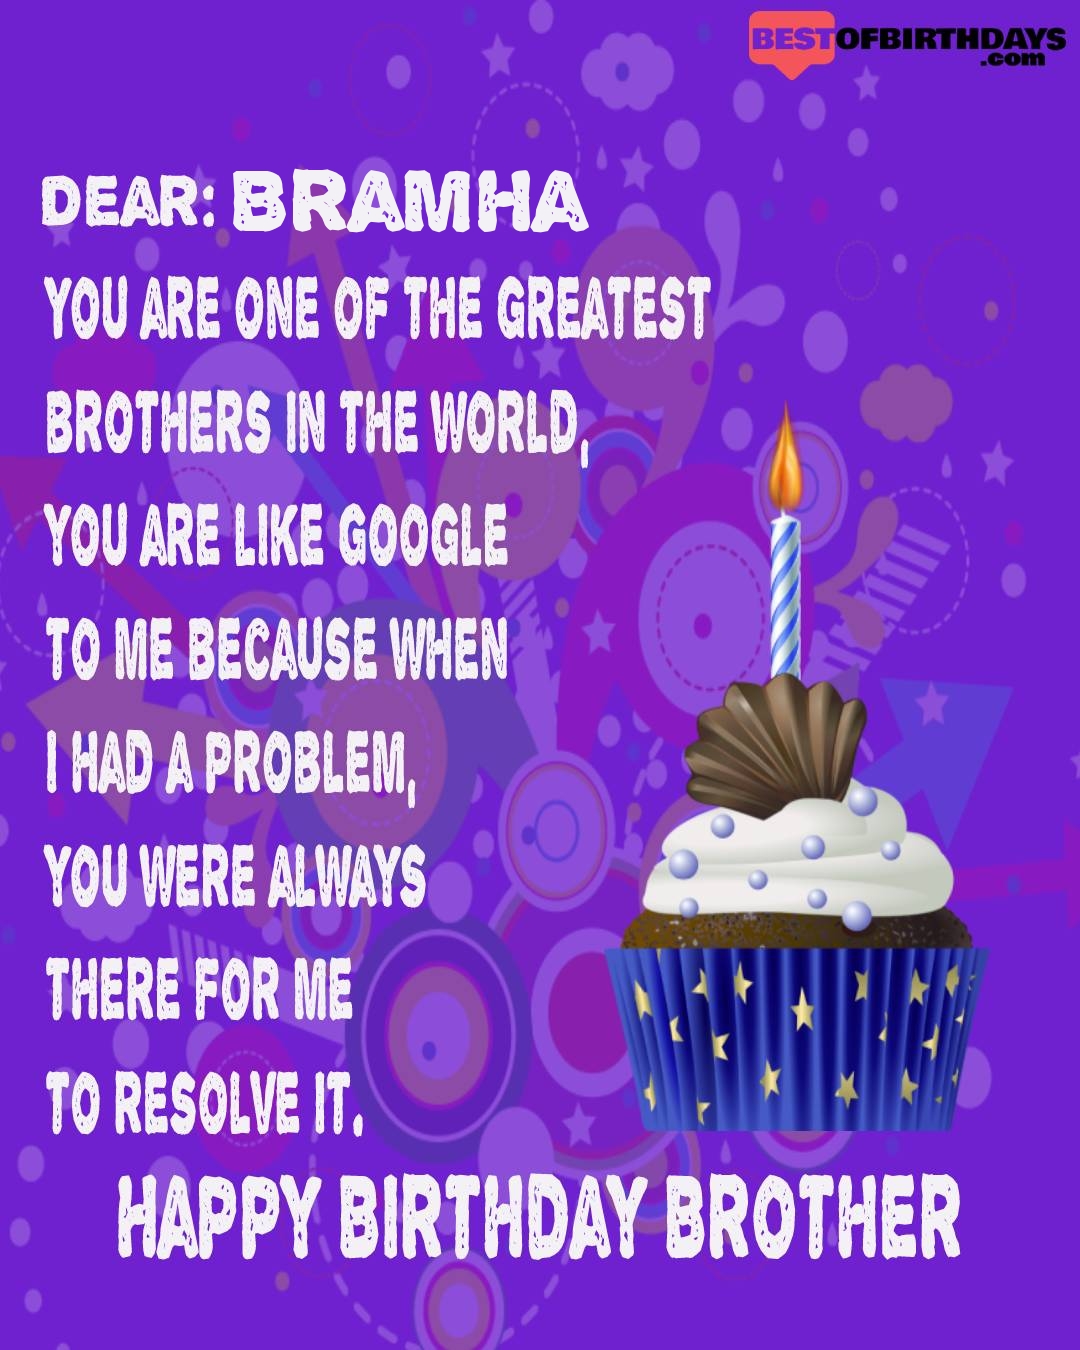 Happy birthday bramha bhai brother bro